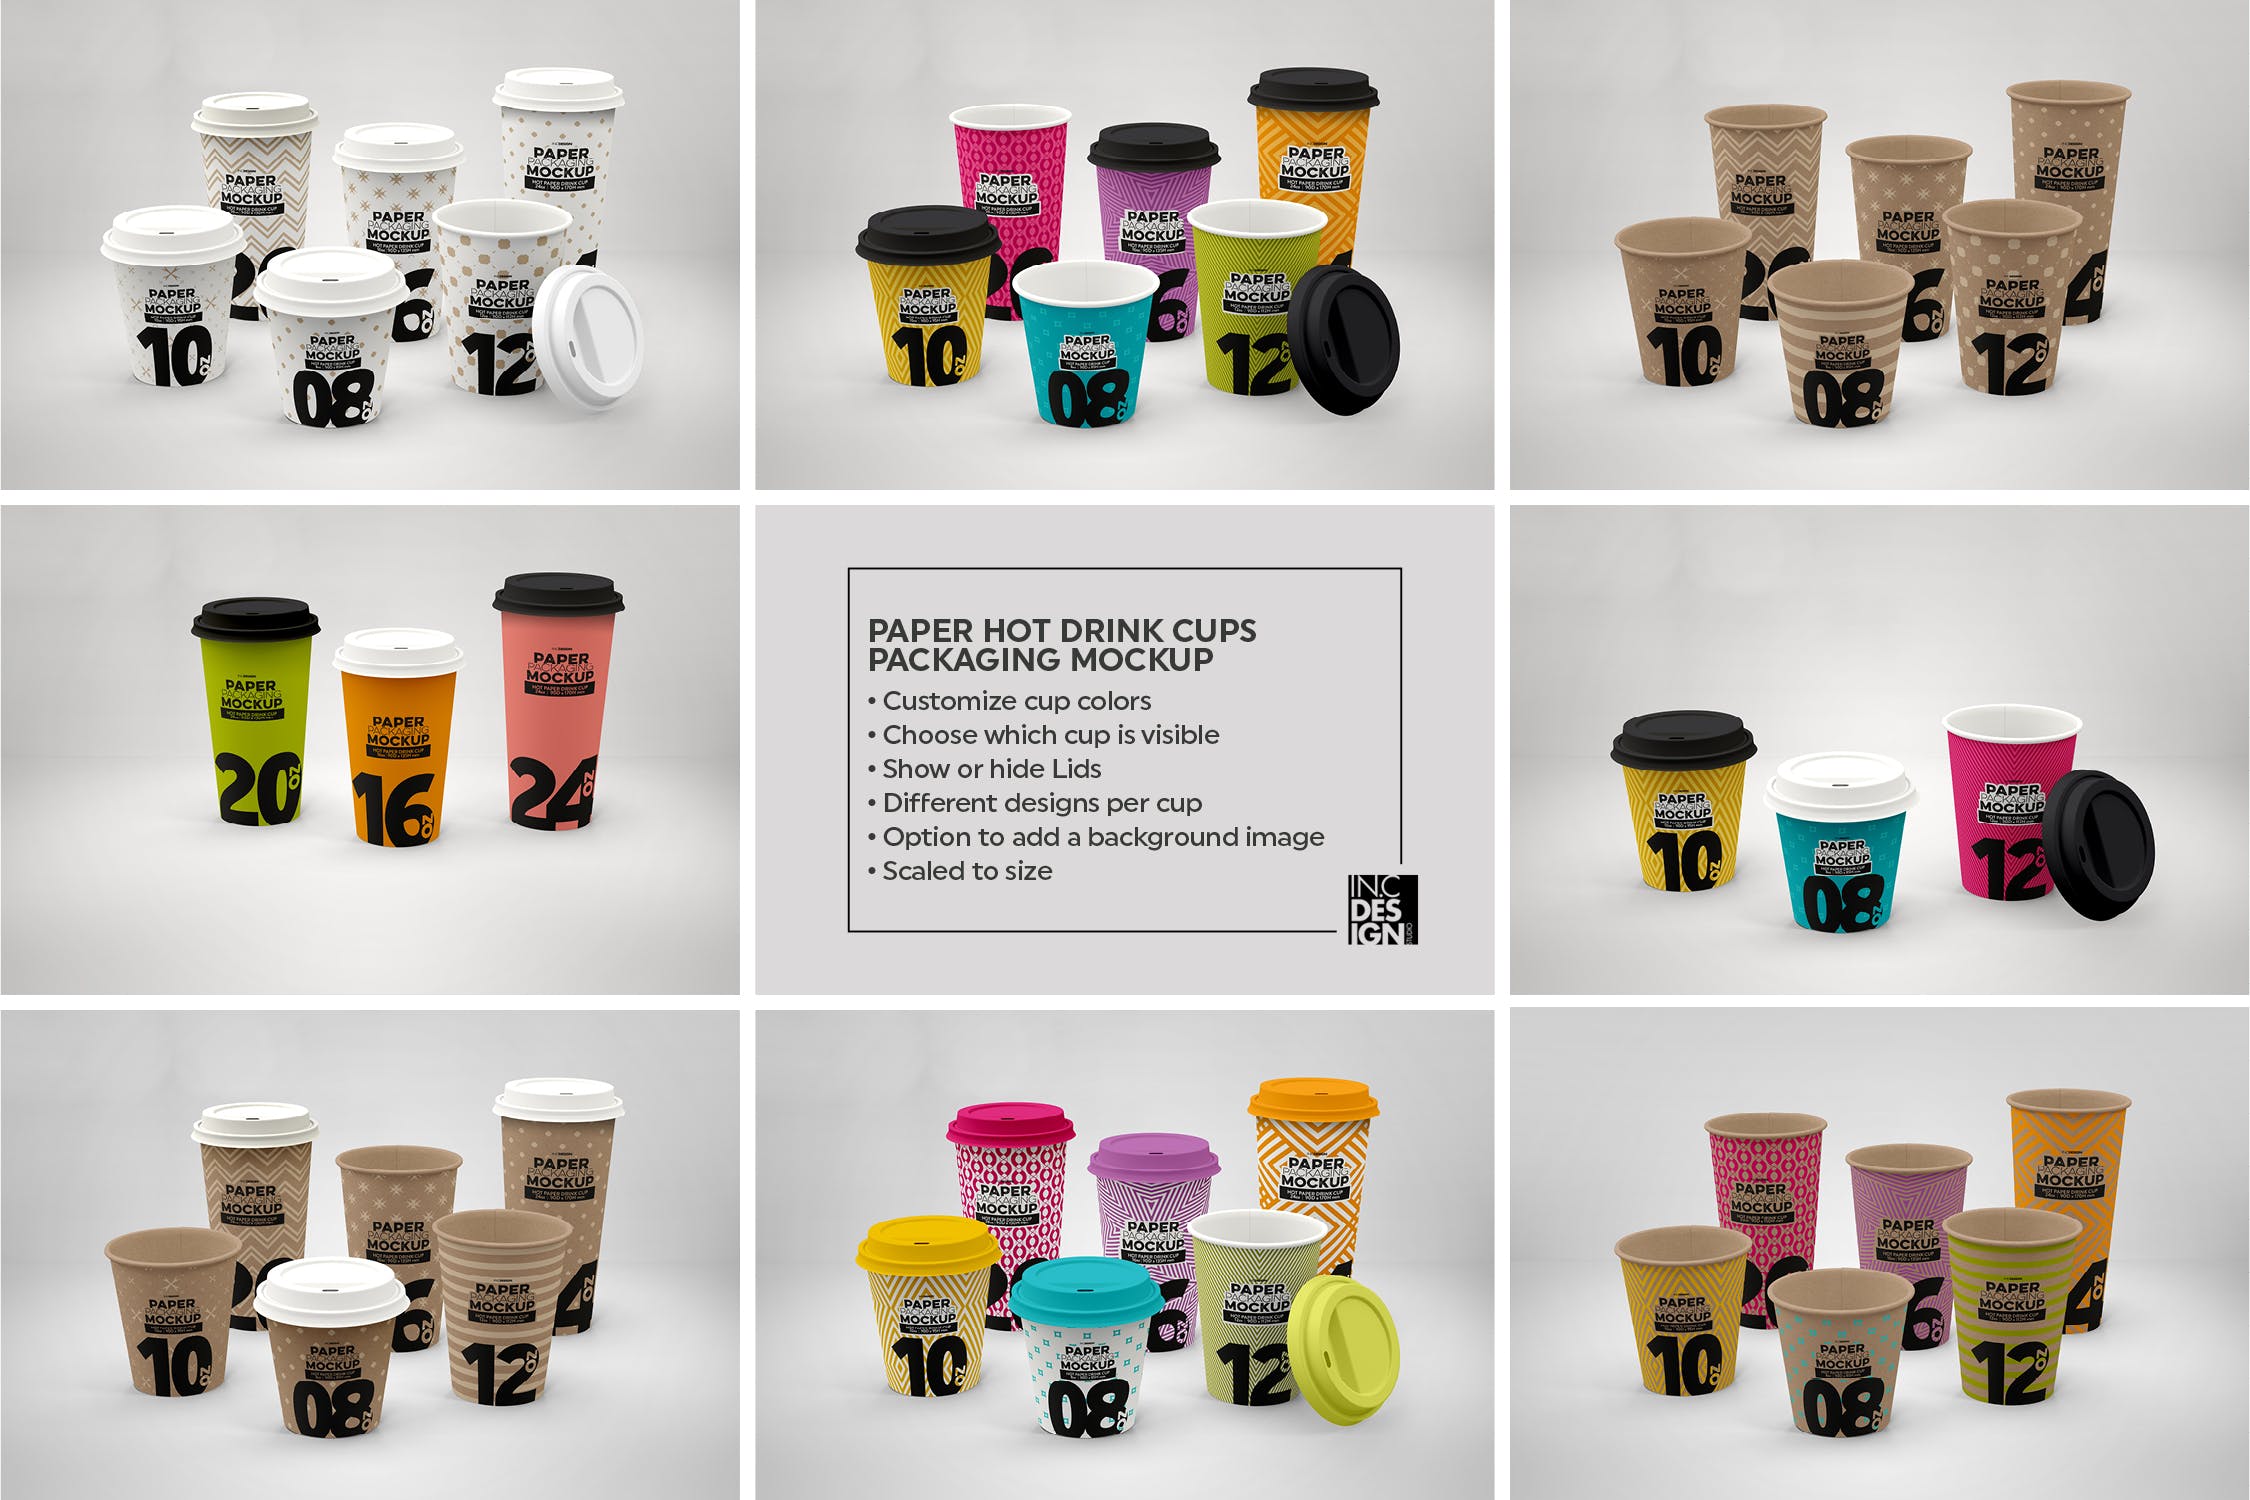 热饮一次性纸杯外观设计16图库精选 Paper Hot Drink Cups Packaging Mockup插图(3)